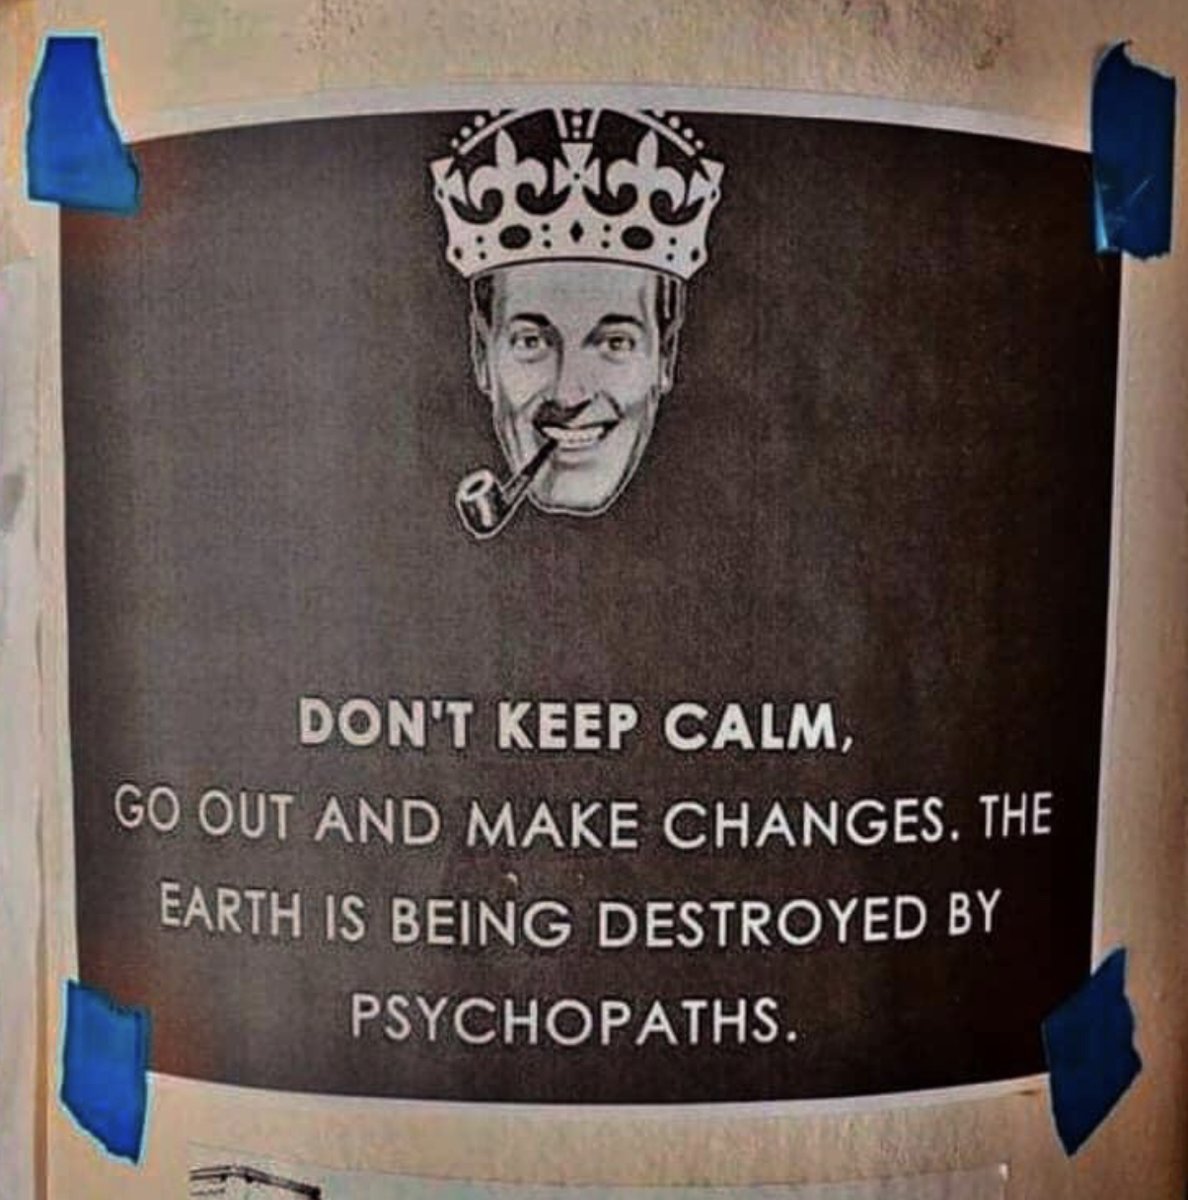 Don’t keep calm, rebel. rebellion.global/get-involved/